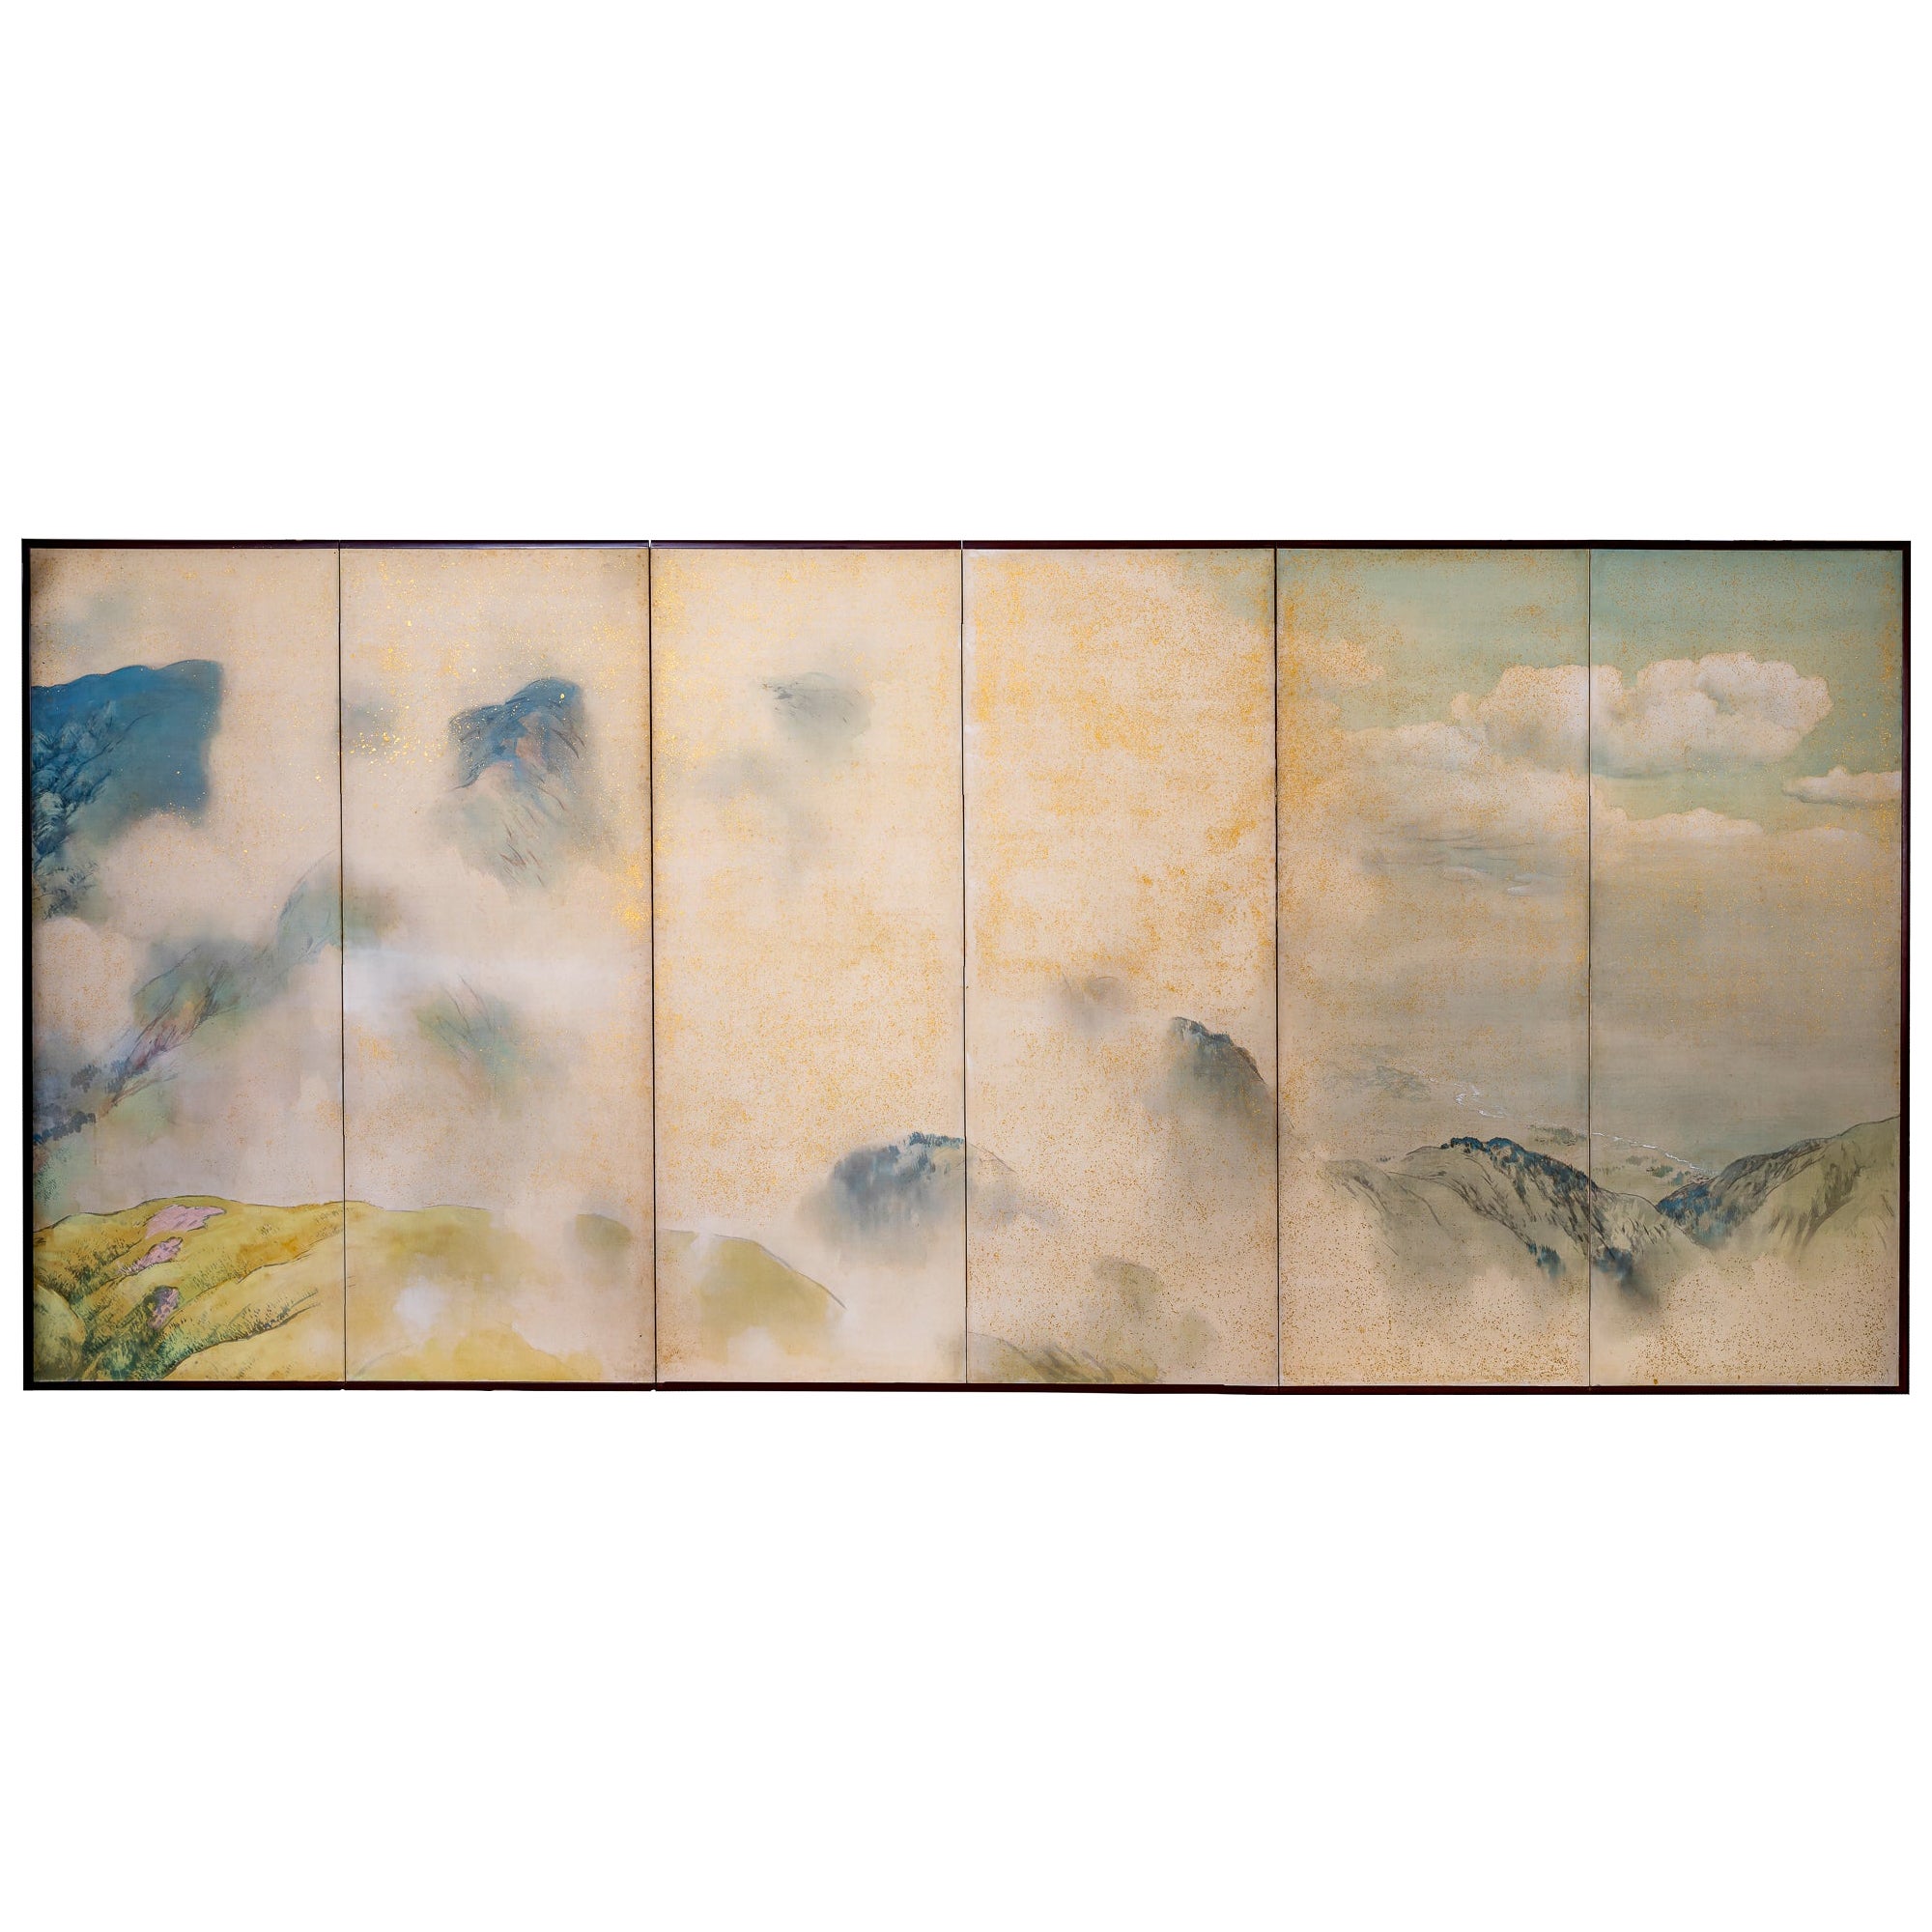 Japanischer Sechs-Panel-Bildschirm: The Mountains in the Mist with Tree-Lined Foothills